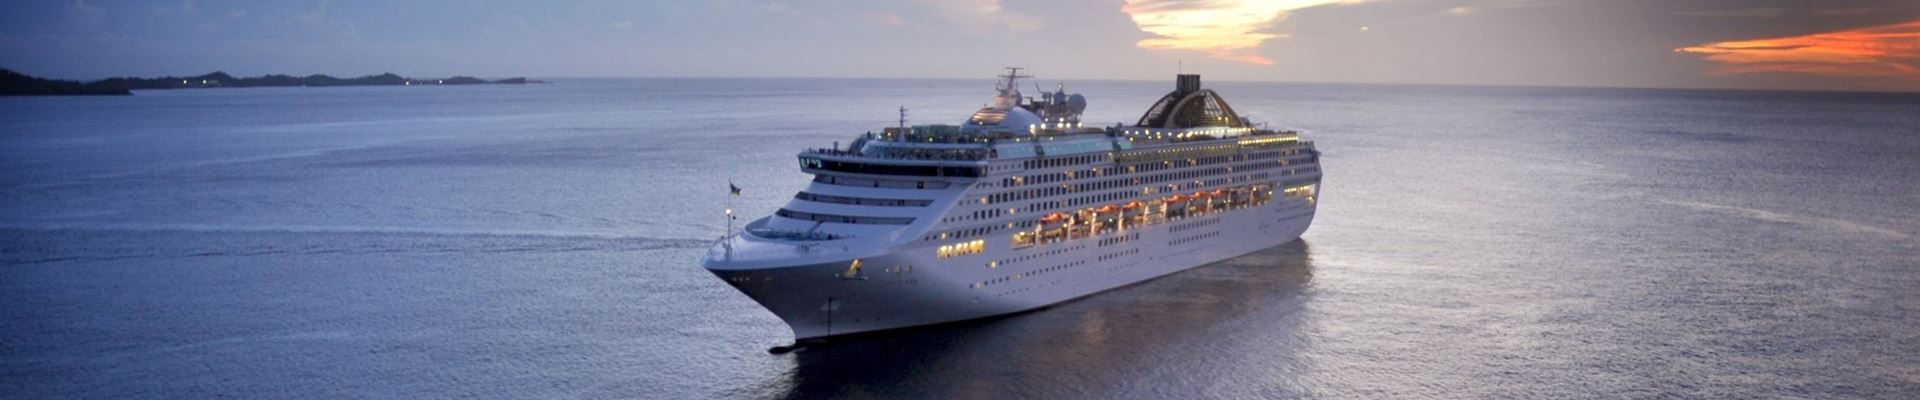 P&O Cruises | Oceana cruise ship